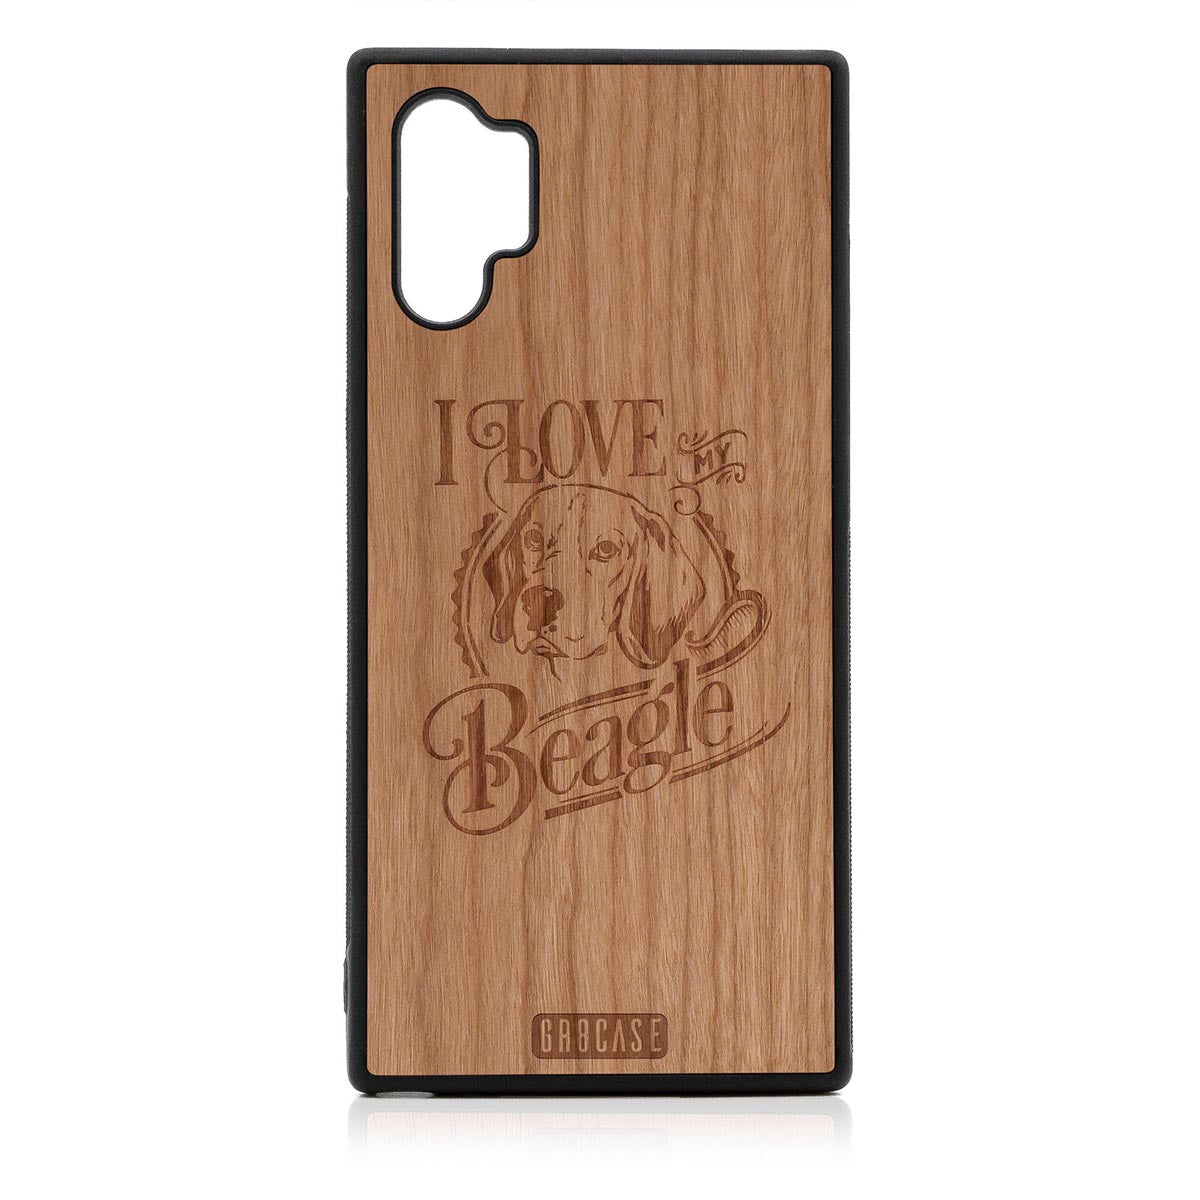 I Love My Beagle Design Wood Case Samsung Galaxy Note 10 Plus by GR8CASE